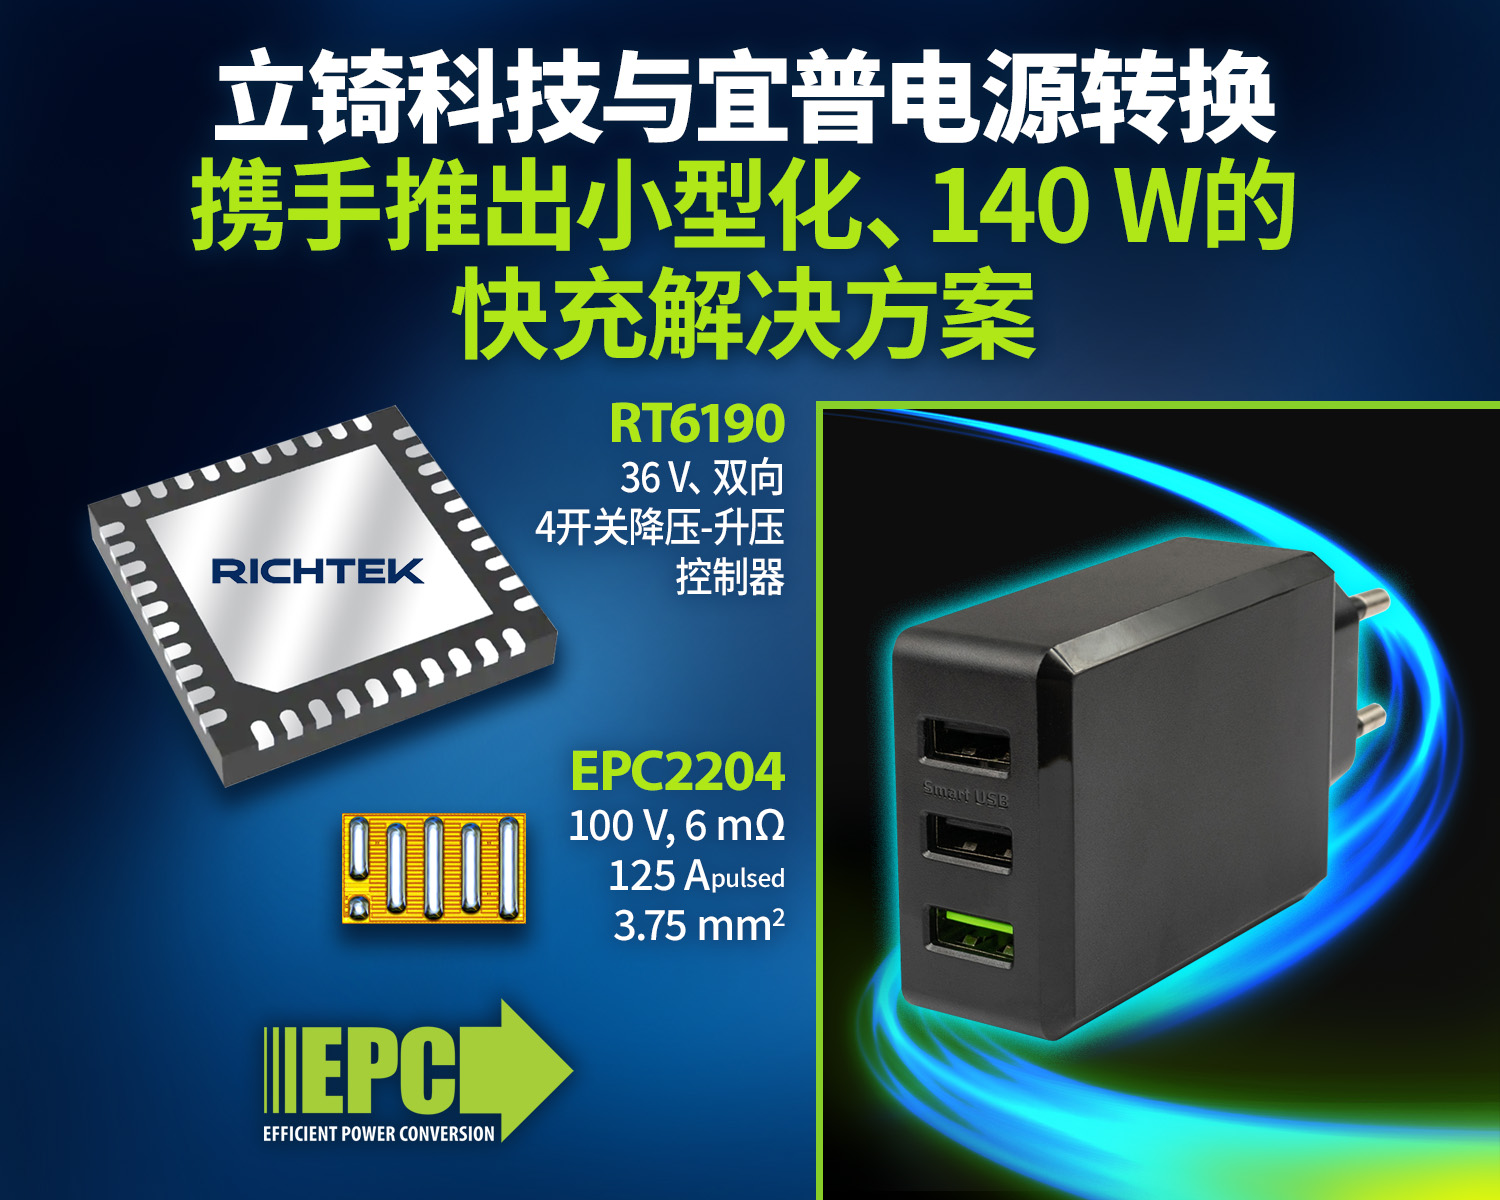 Richtek and EPC2204 PR Graphic_CN.jpg